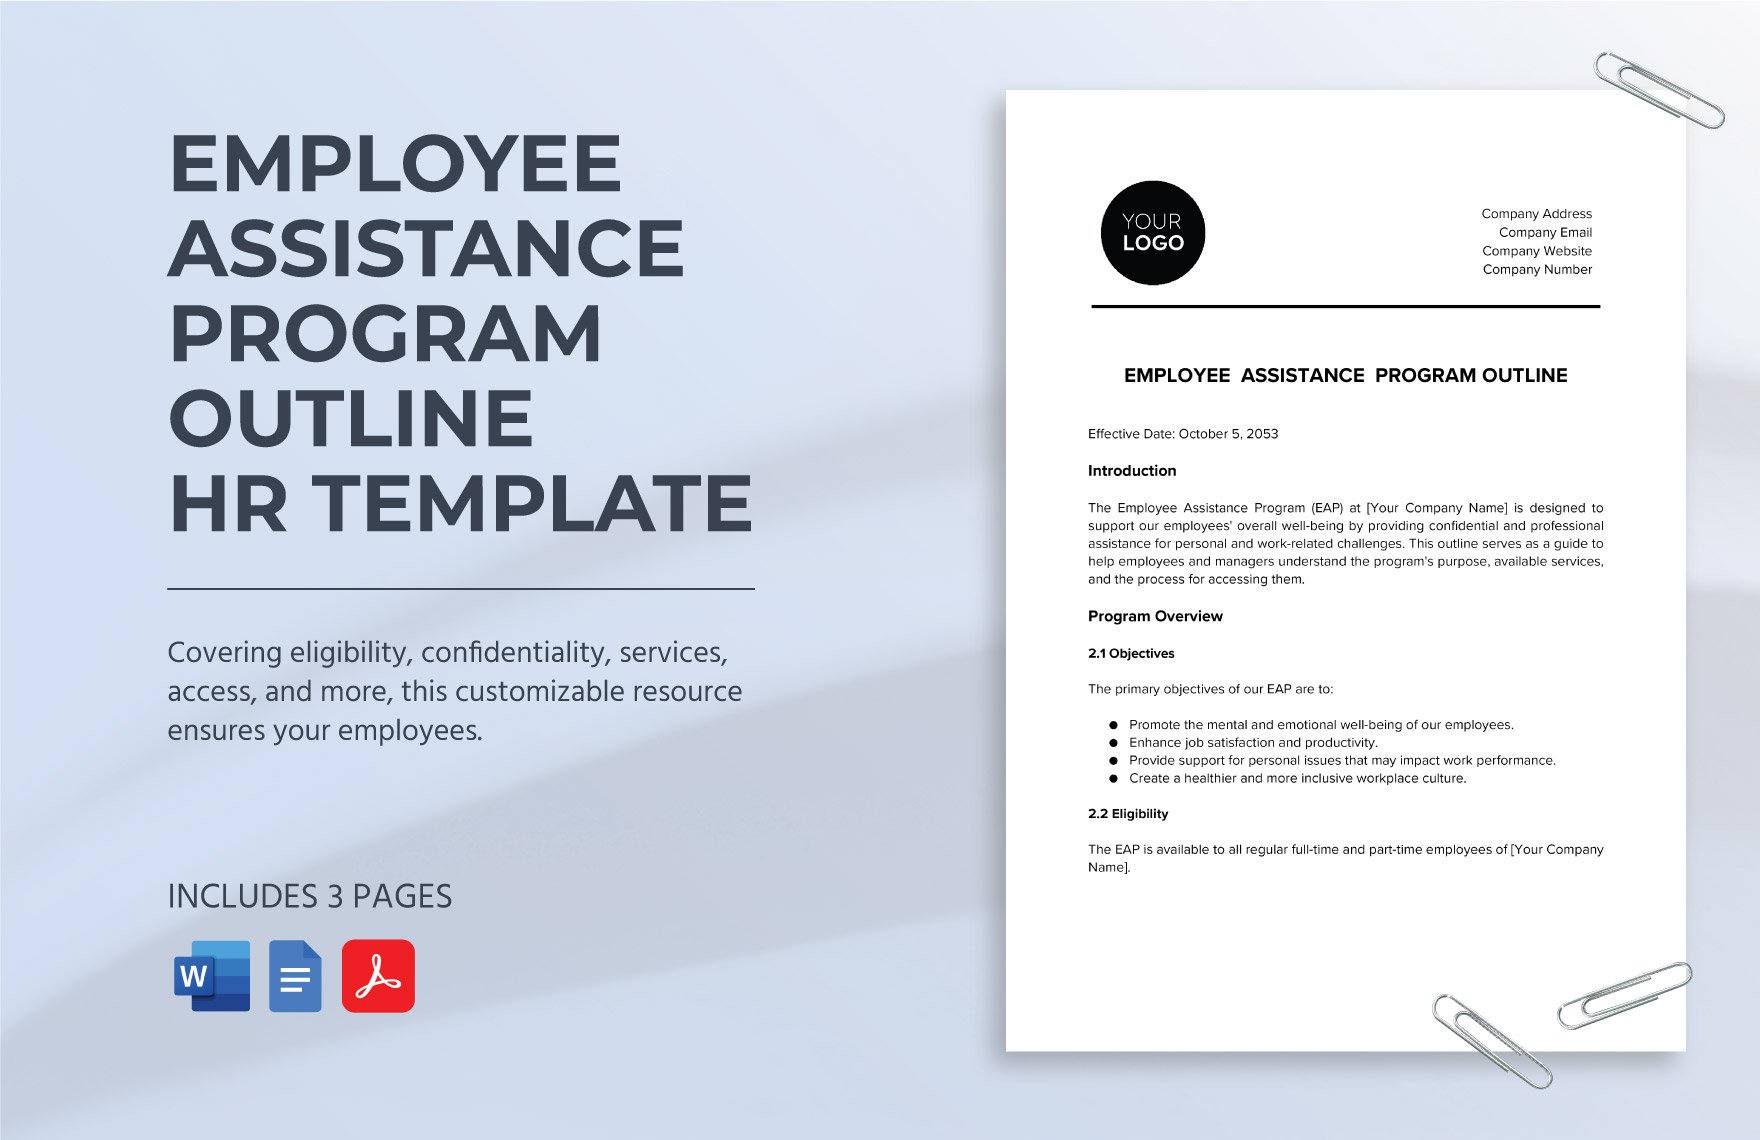 Employee Assistance Program Outline HR Template in Word, Google Docs, PDF